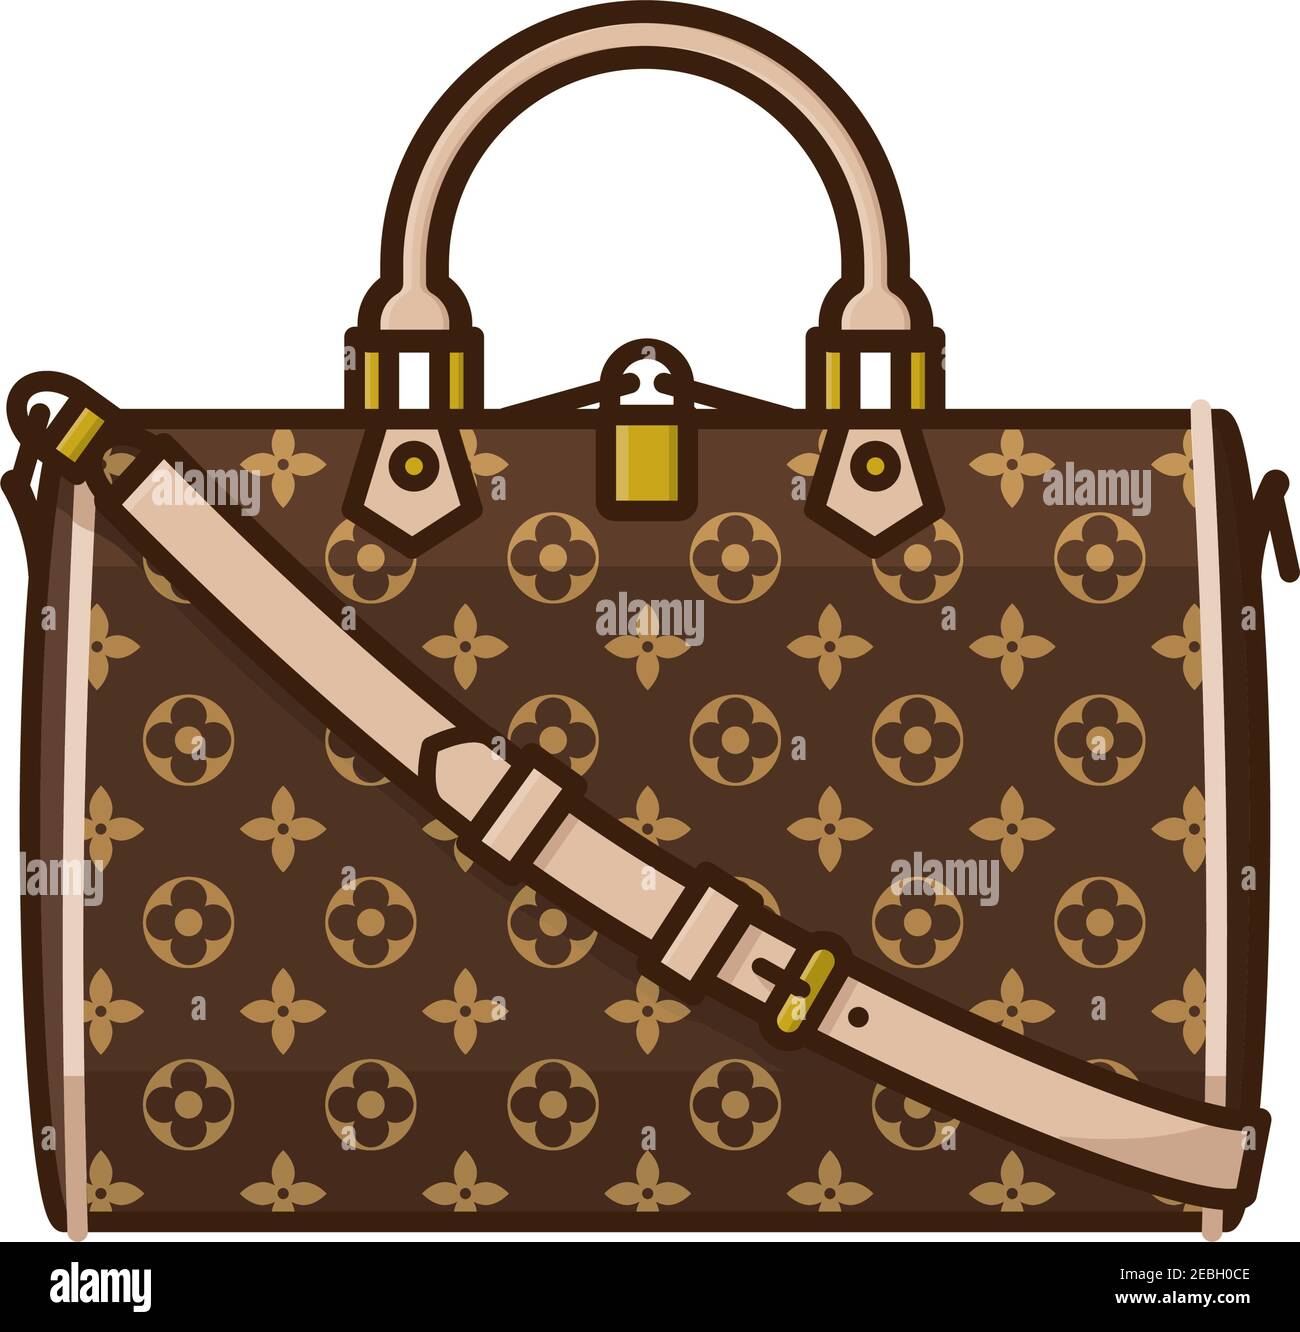 LV Handbags July-Aug 2012 Drawings on Behance